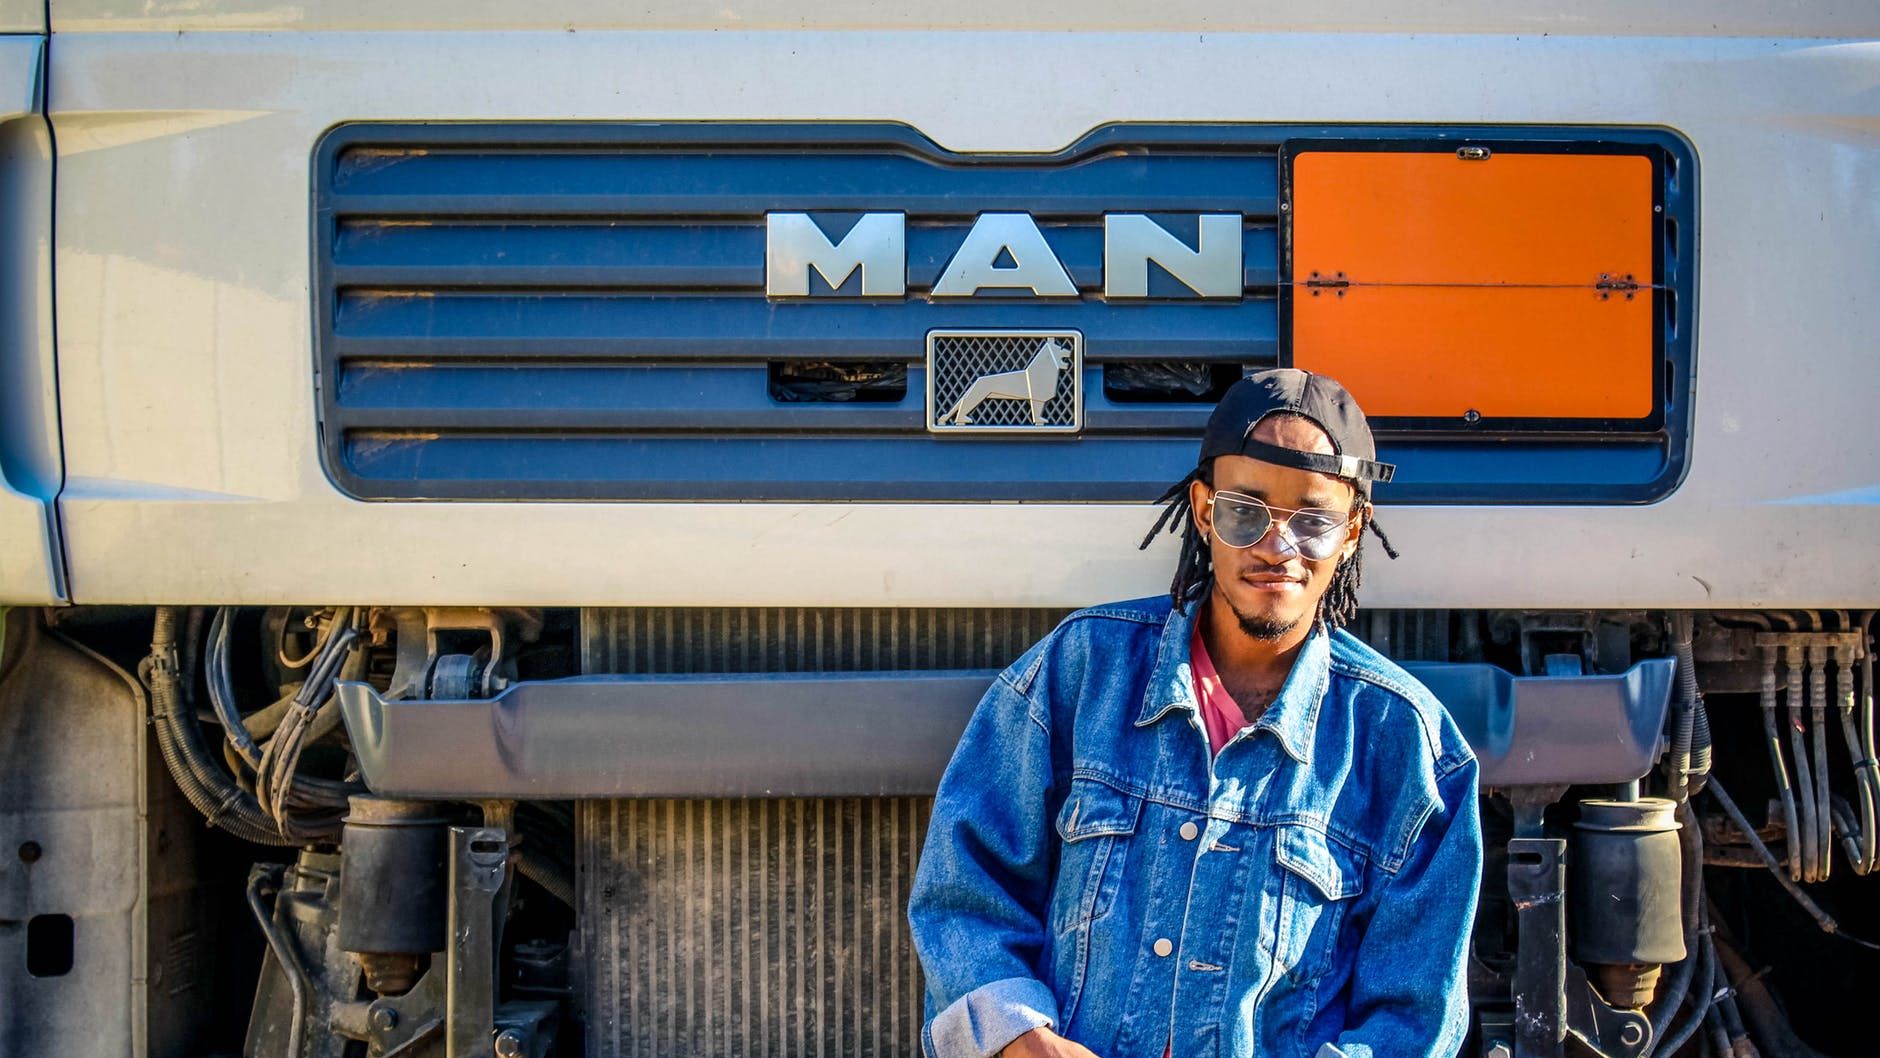 Человек на фоне грузовика фирмы MAN